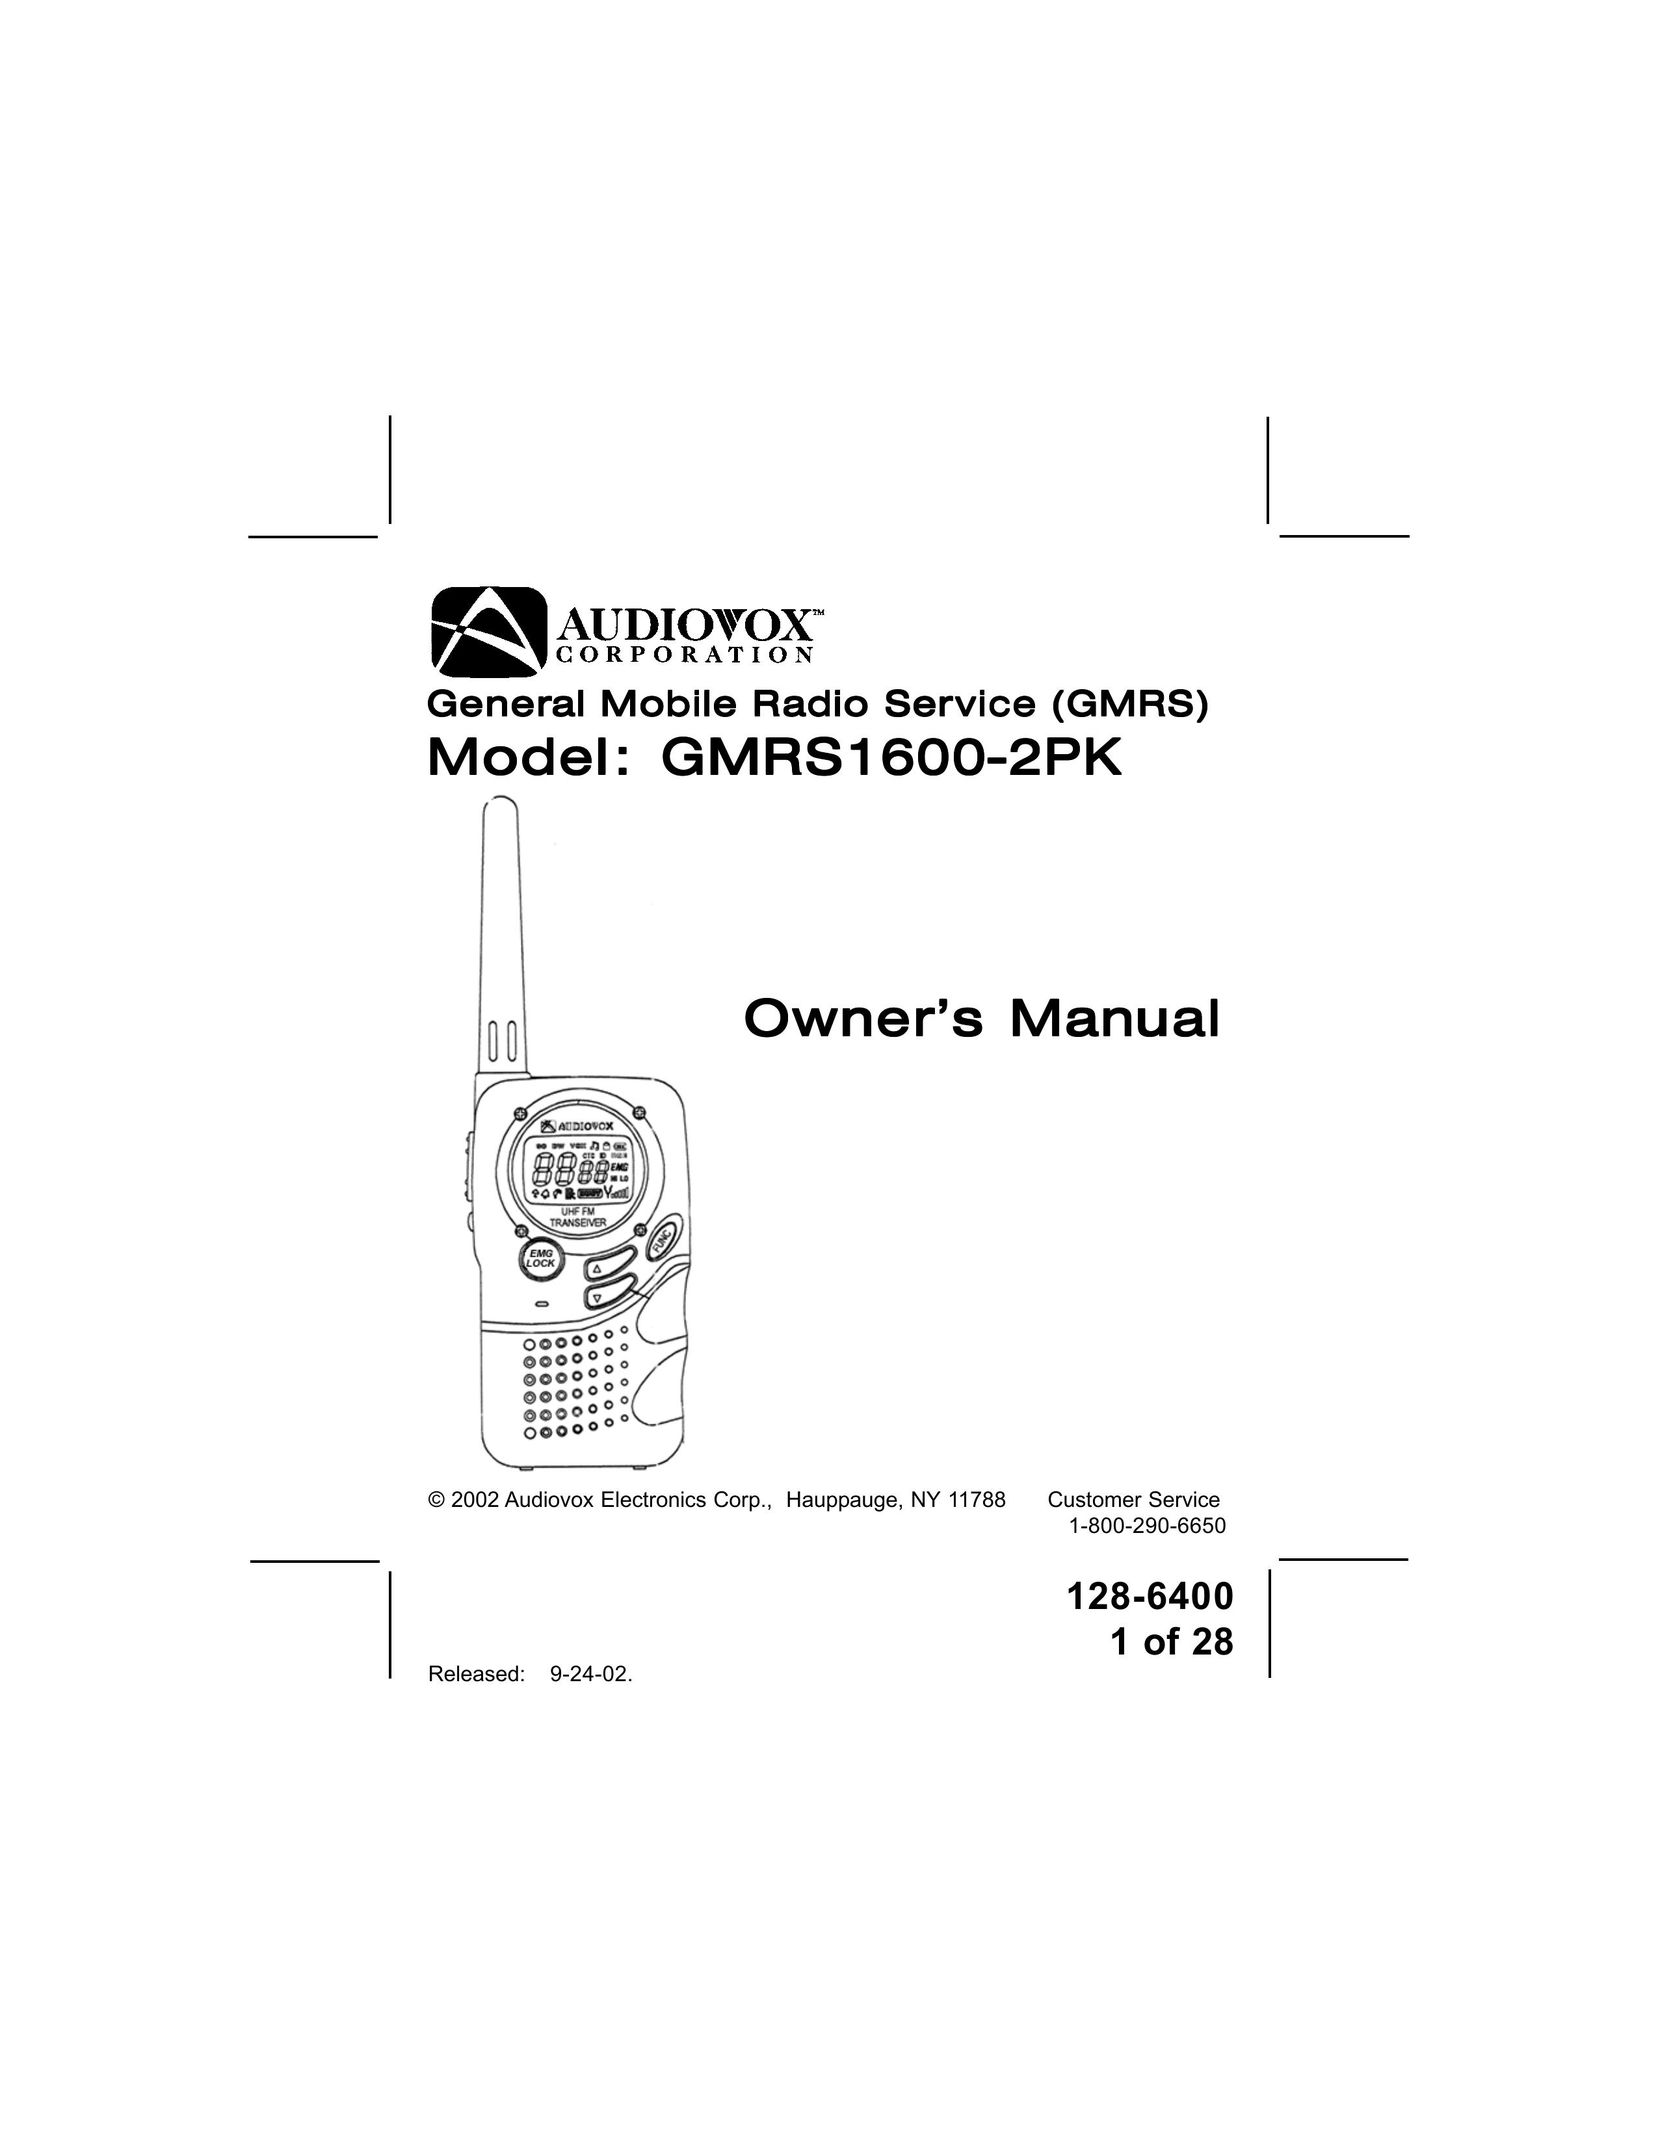 Audiovox GMRS1600-2PK Portable Radio User Manual